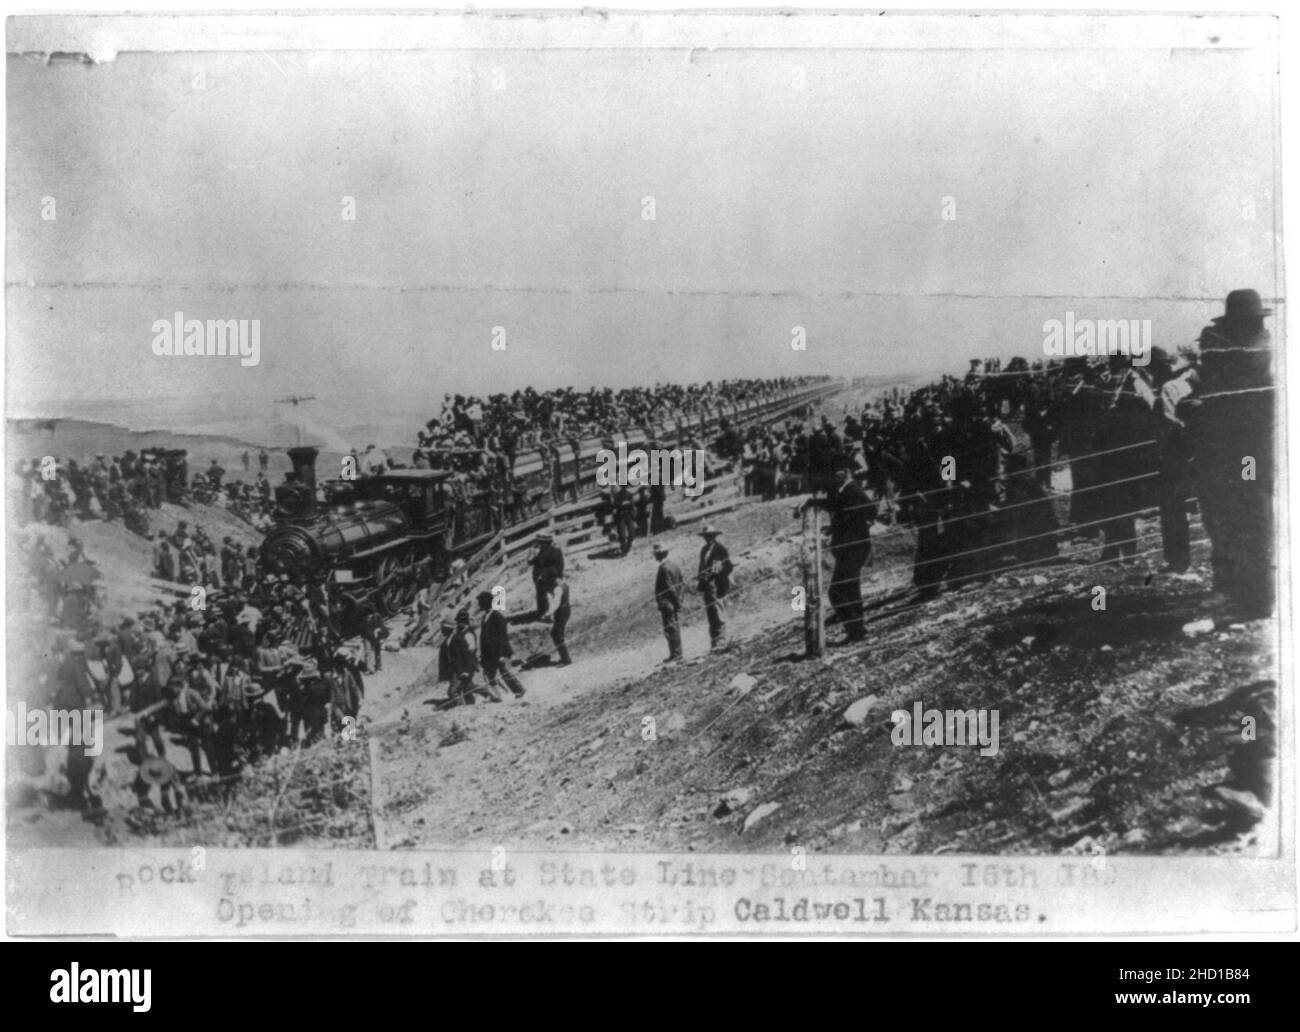 Rock Island train at State Line, September 16th 1893. opening of Cherokee Strip, Caldwell, Kansas. Stock Photo